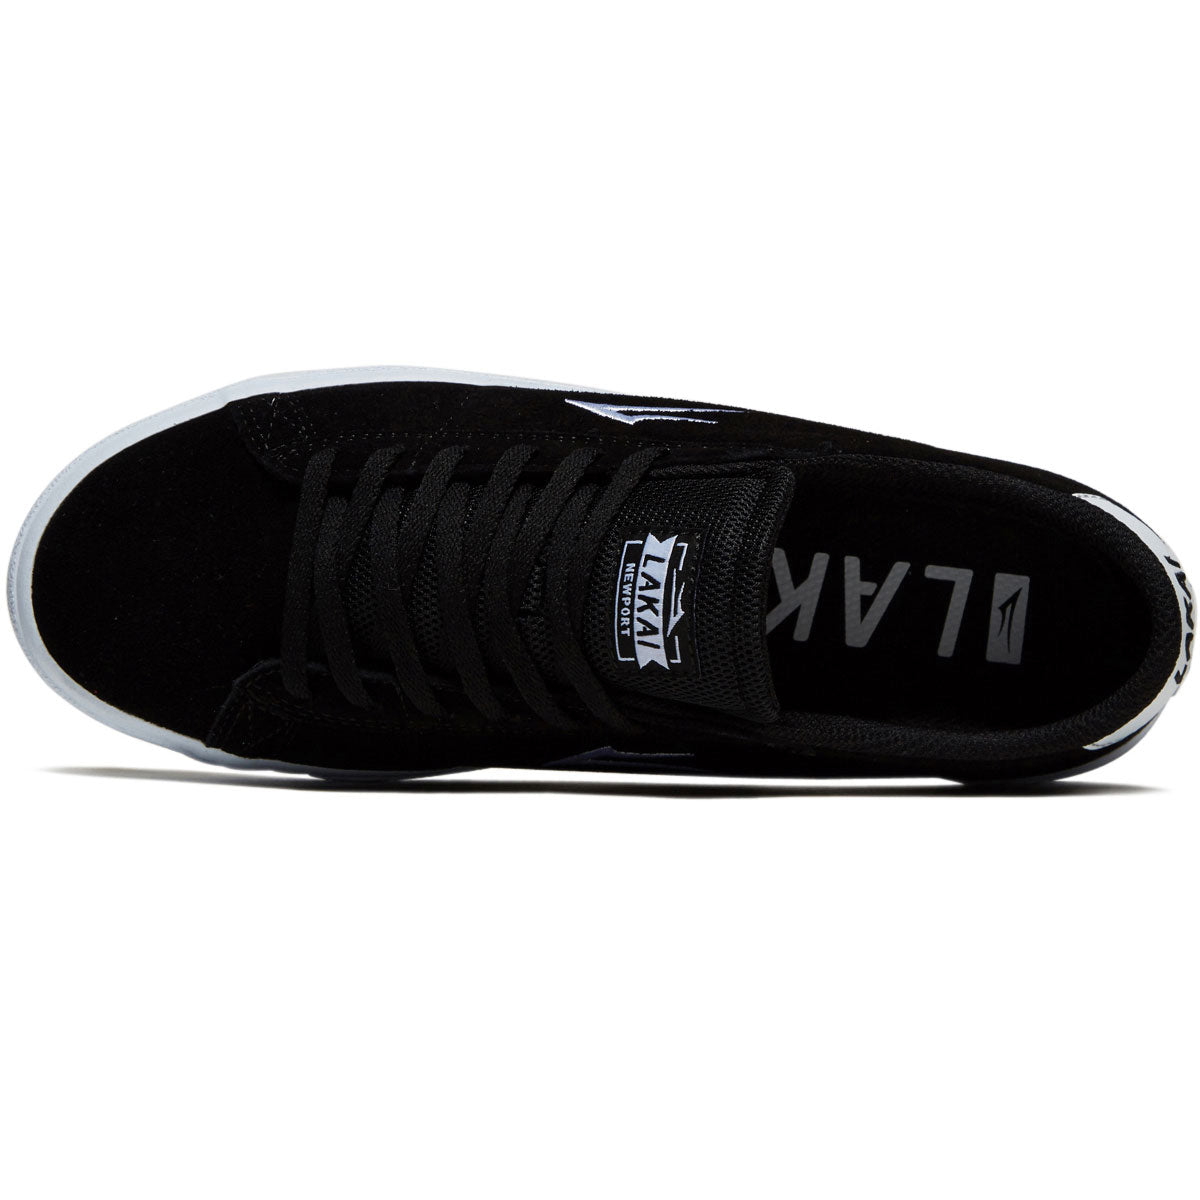 Lakai Newport 2024 Shoes - Black Suede image 3